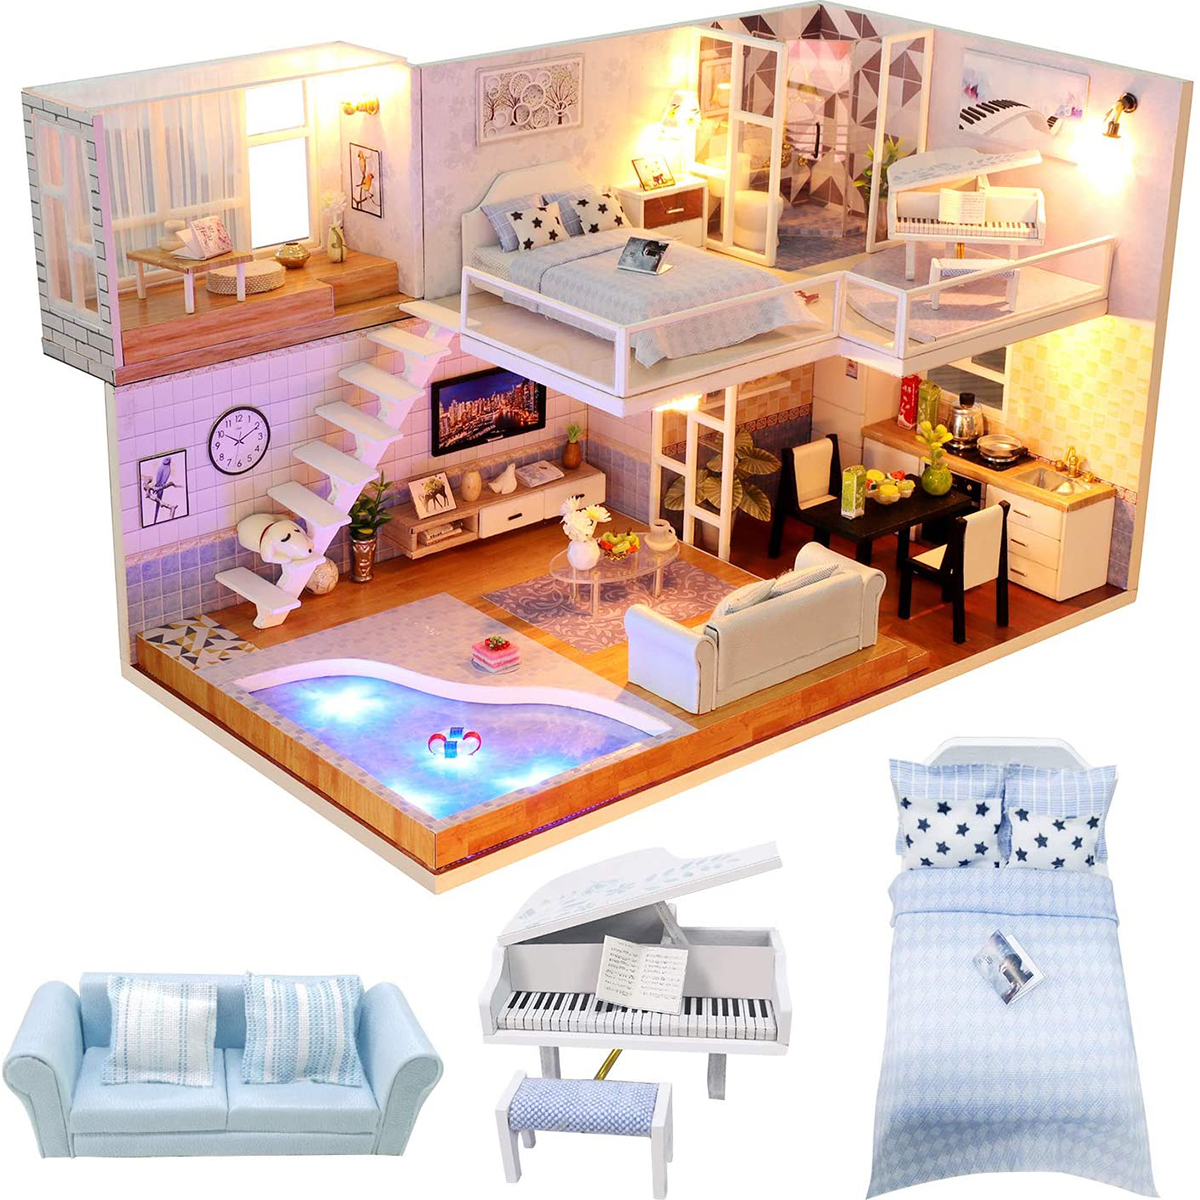 Details about  / DIY LED Loft Apartment Mini Dollhouse Wooden Furniture Kit Doll Home House Model